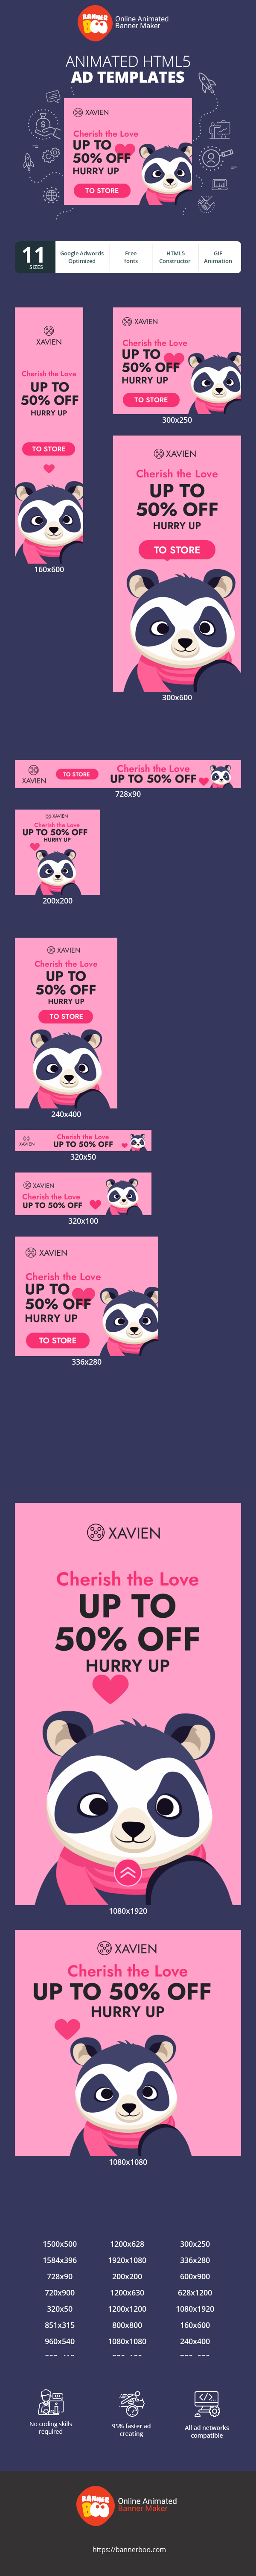 Szablon reklamy banerowej — Cherish The Love Up To 50% Off Hurry Up — Valentine's Day